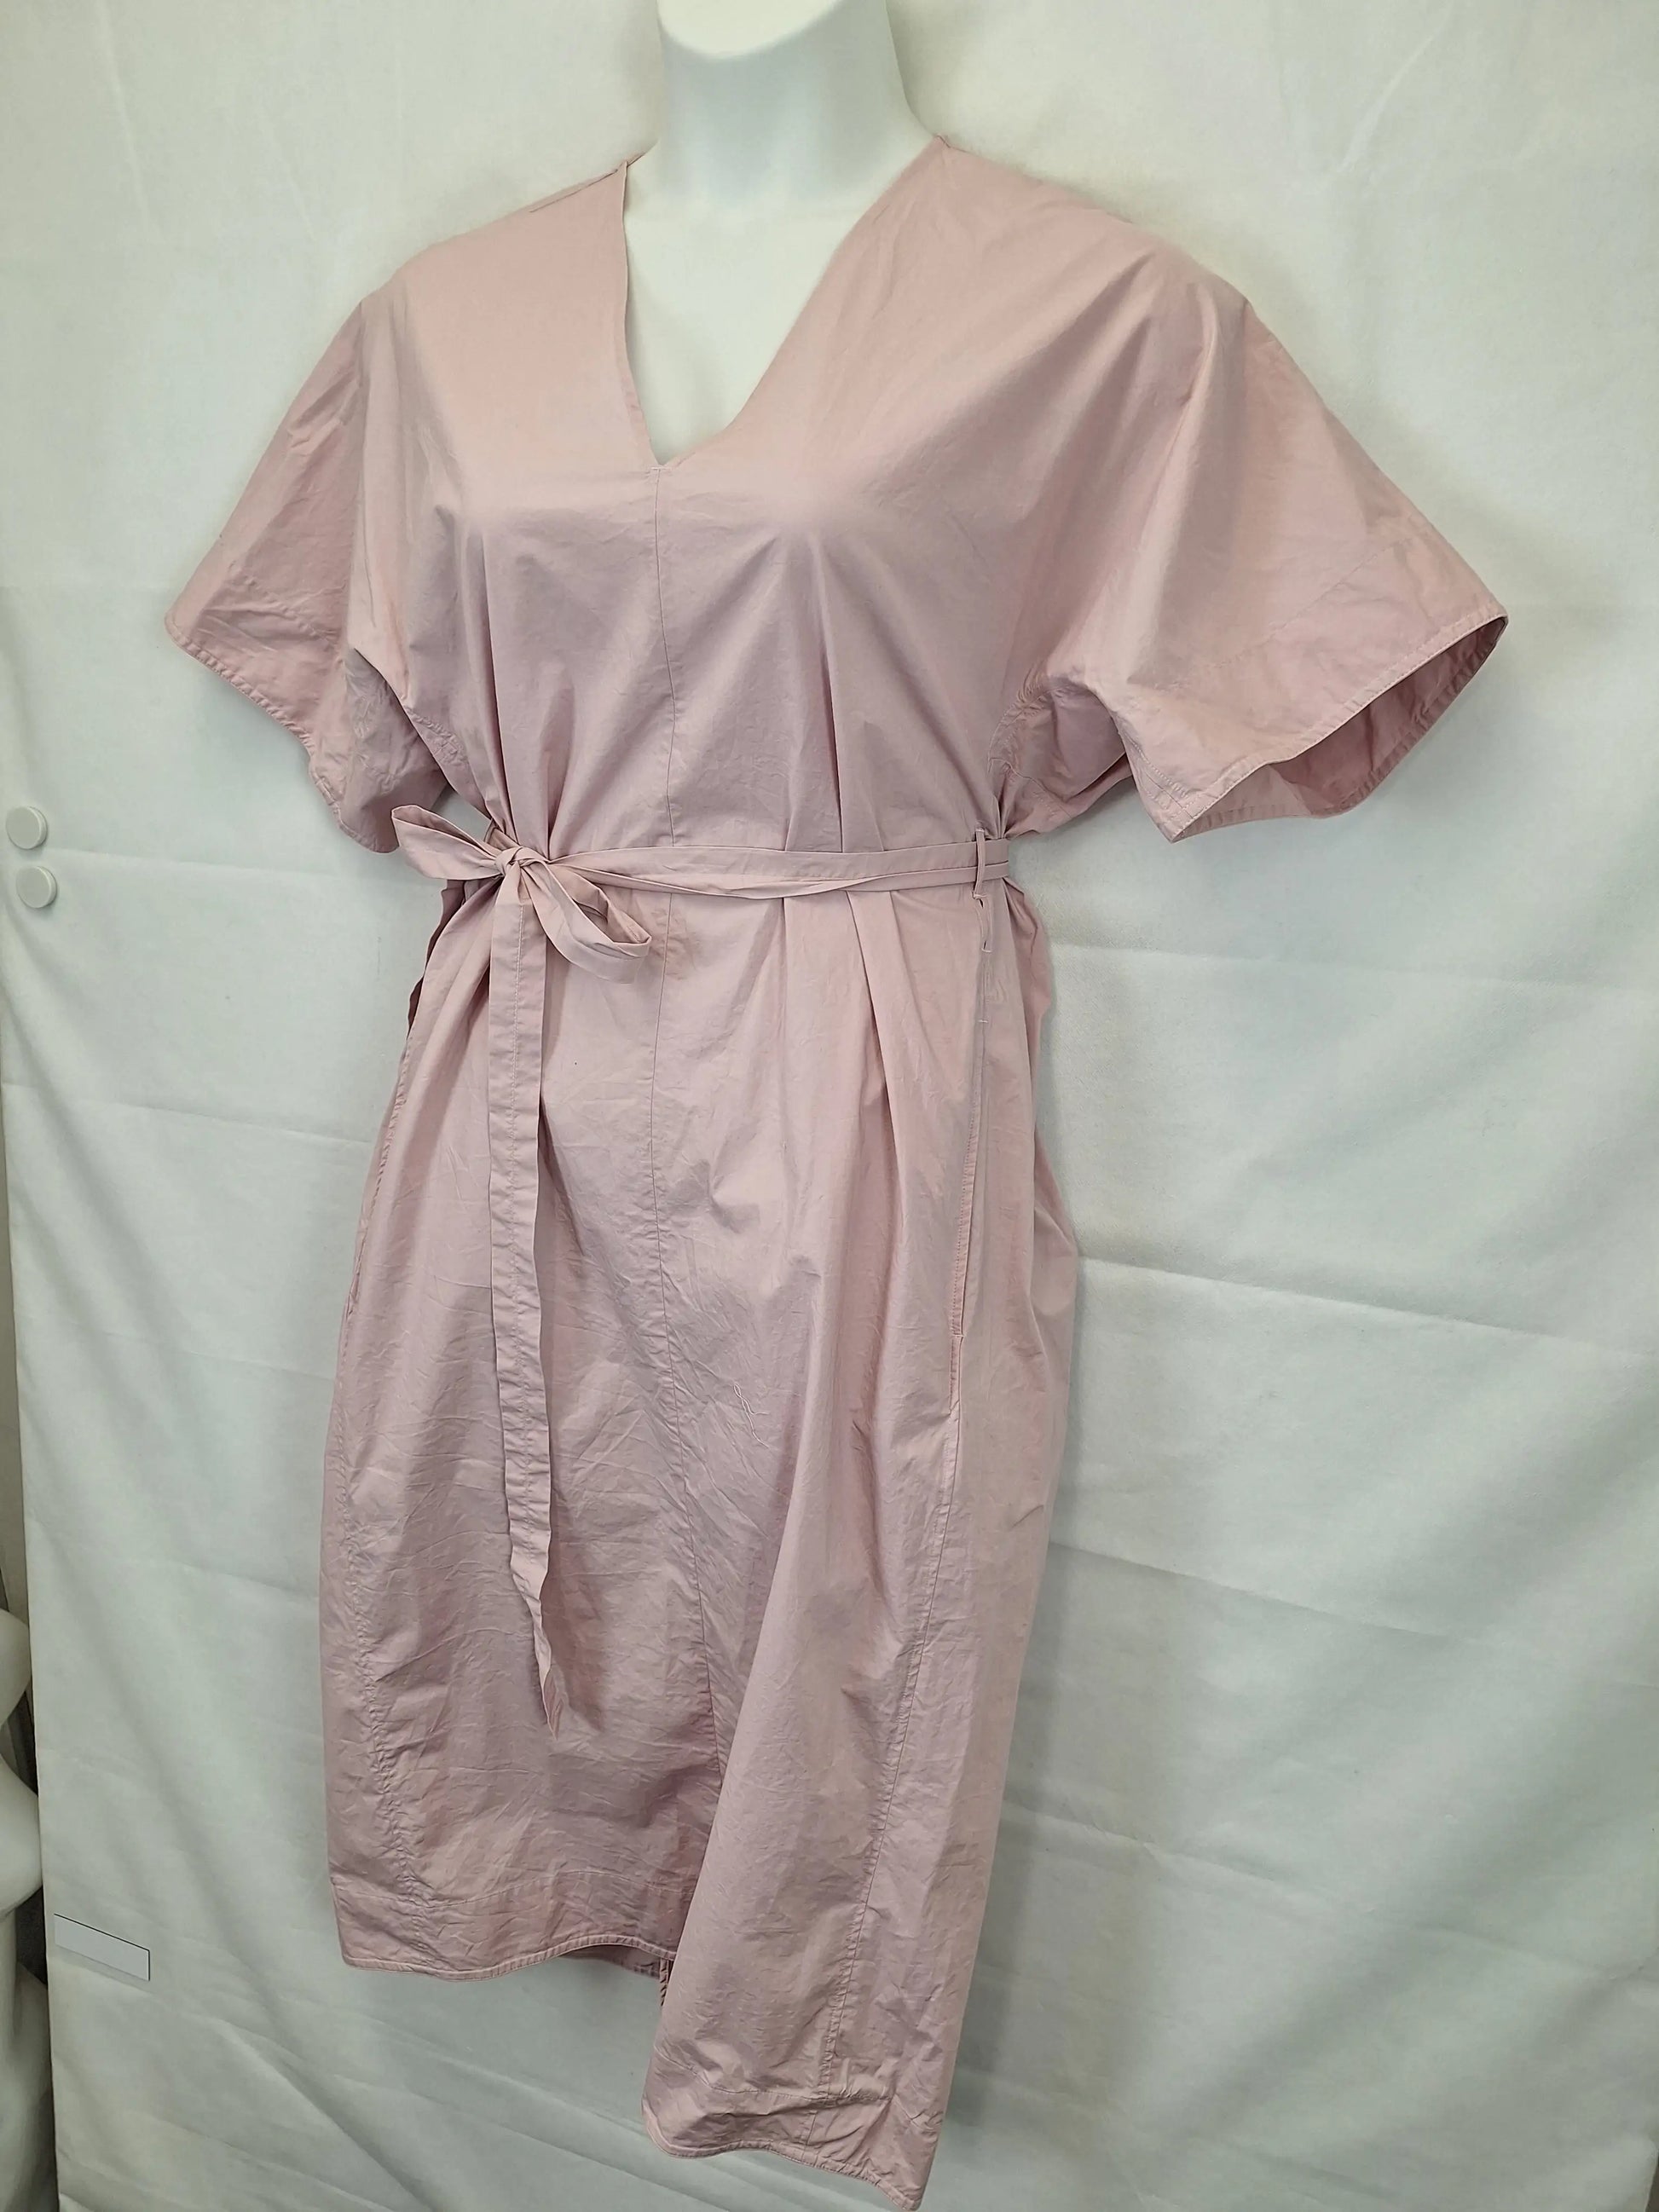 Cos Blush Waist Tie Midi Dress Size 12 by SwapUp-Online Second Hand Store-Online Thrift Store